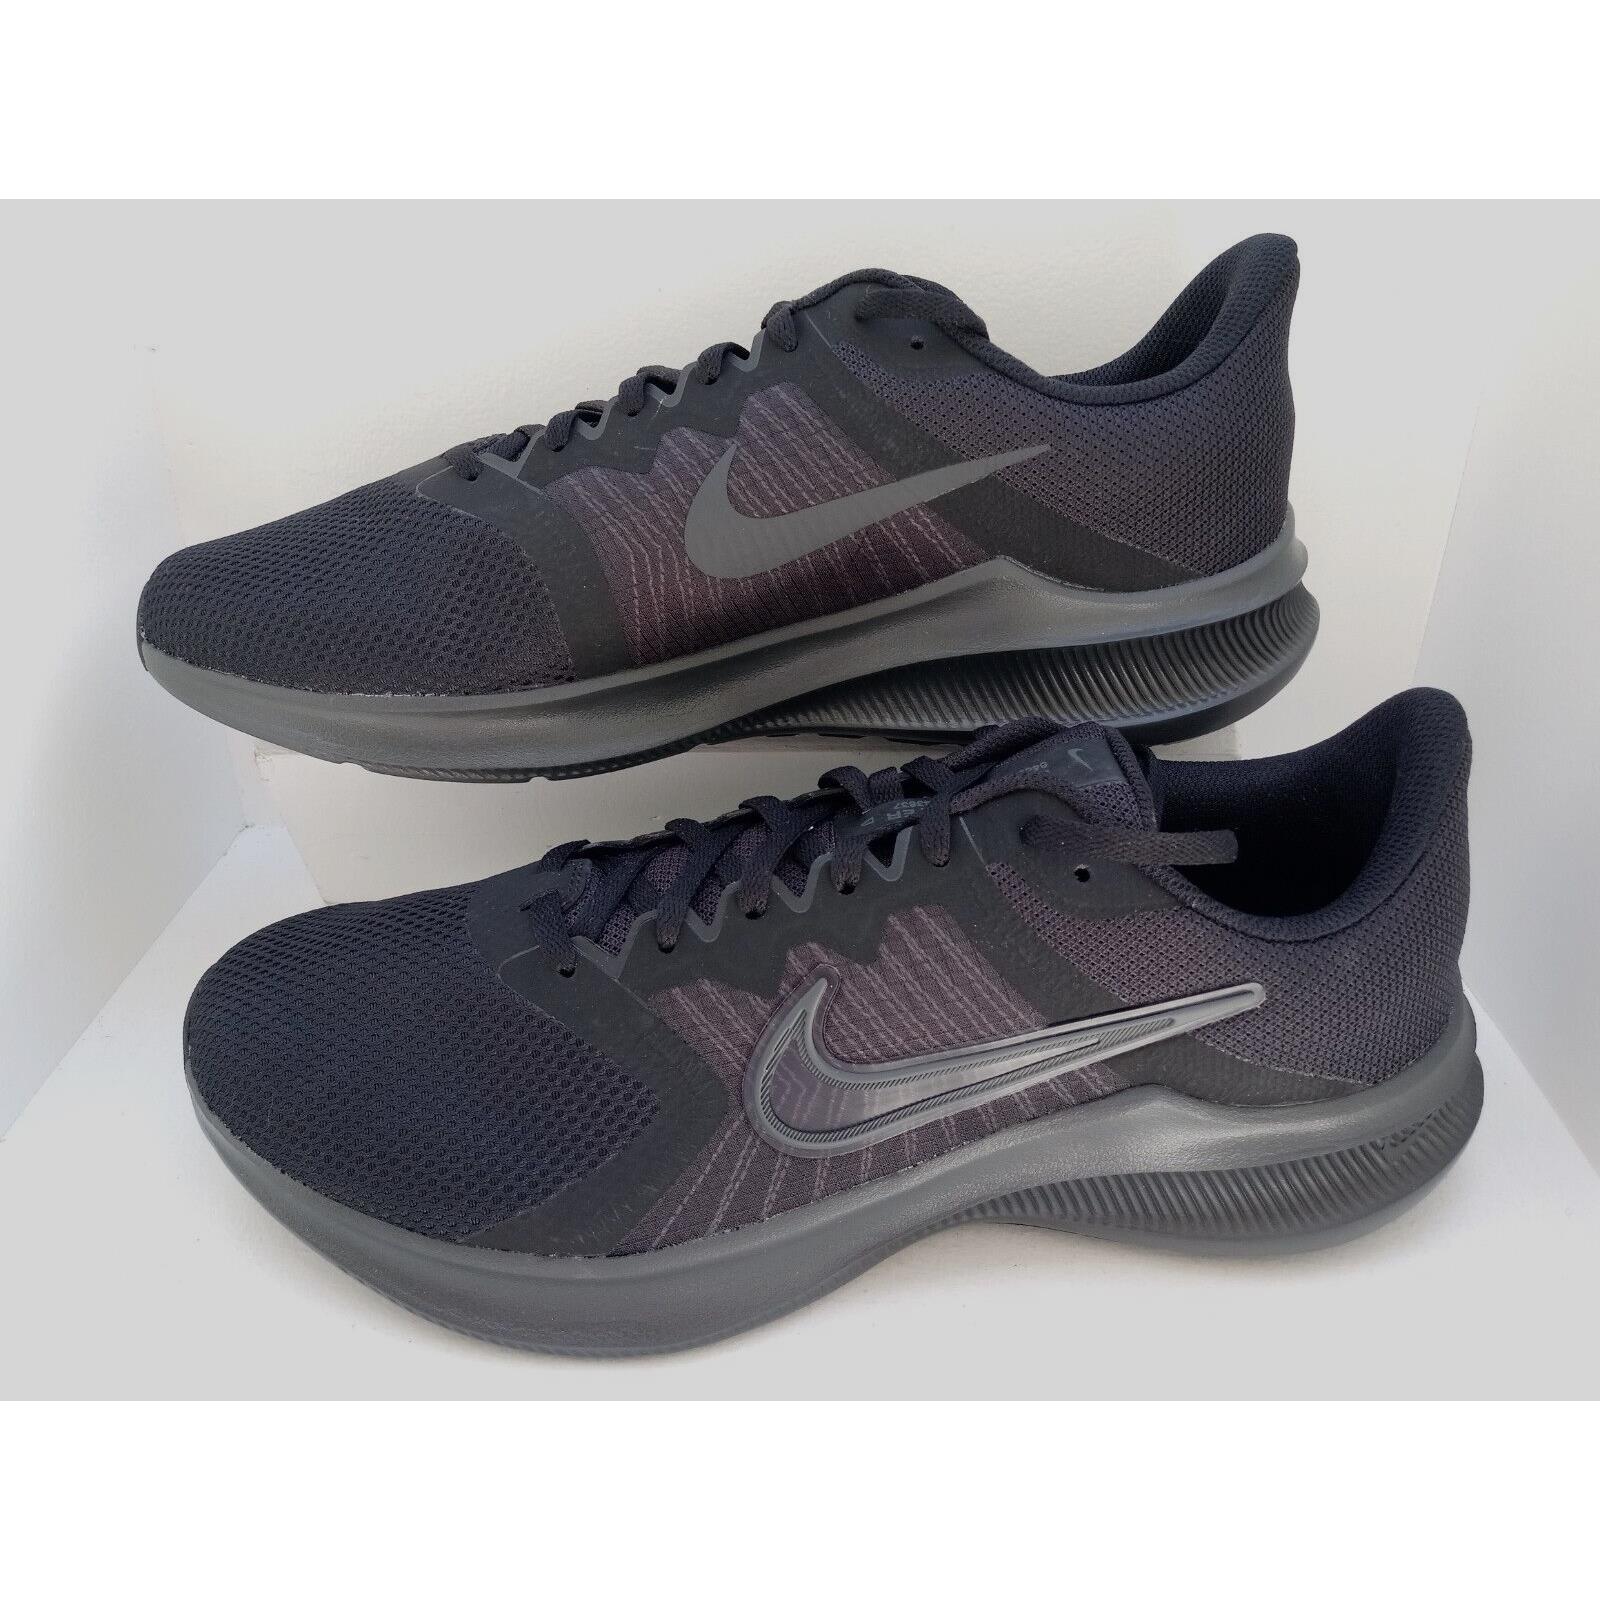 Nike Downshifter 11 4E Extra Wide Mens Shoe Size 8 8.5 9 10 10.5 11 12 13